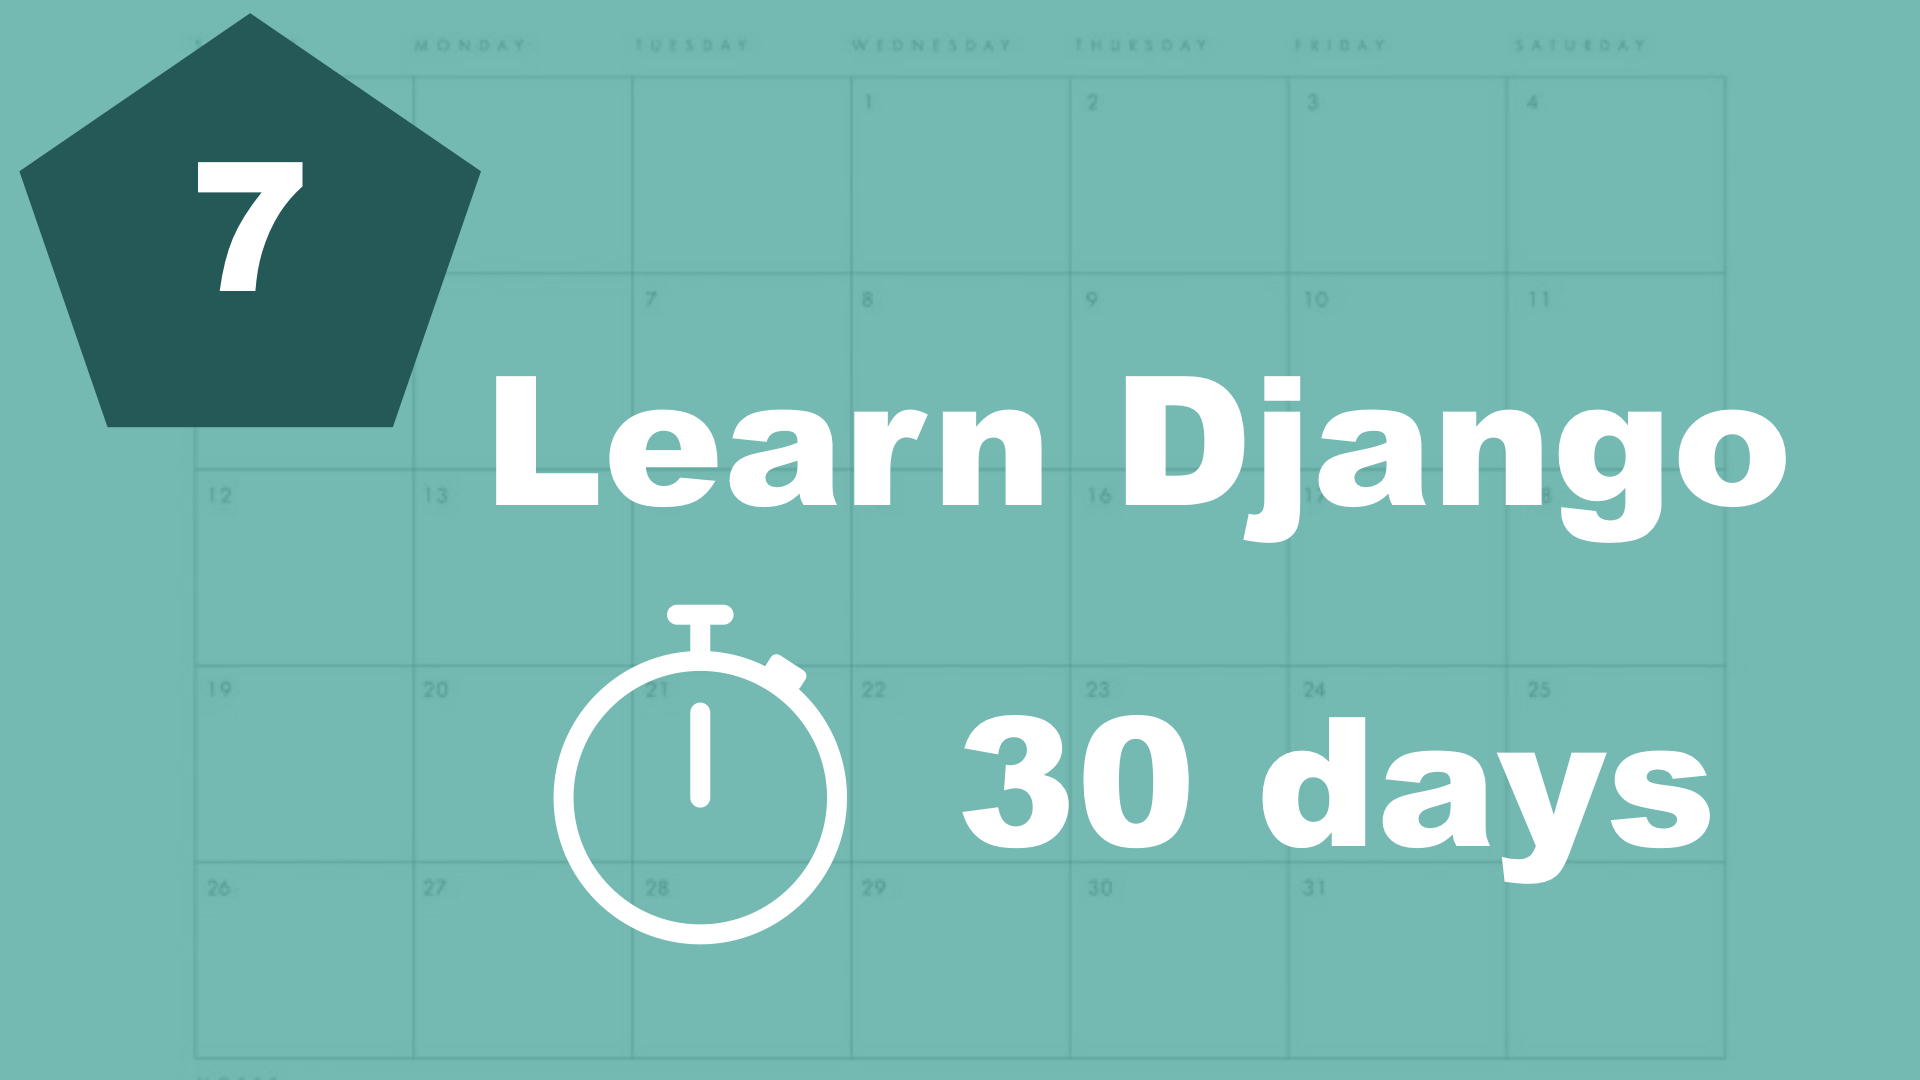 Testing our site - 30 days of Django